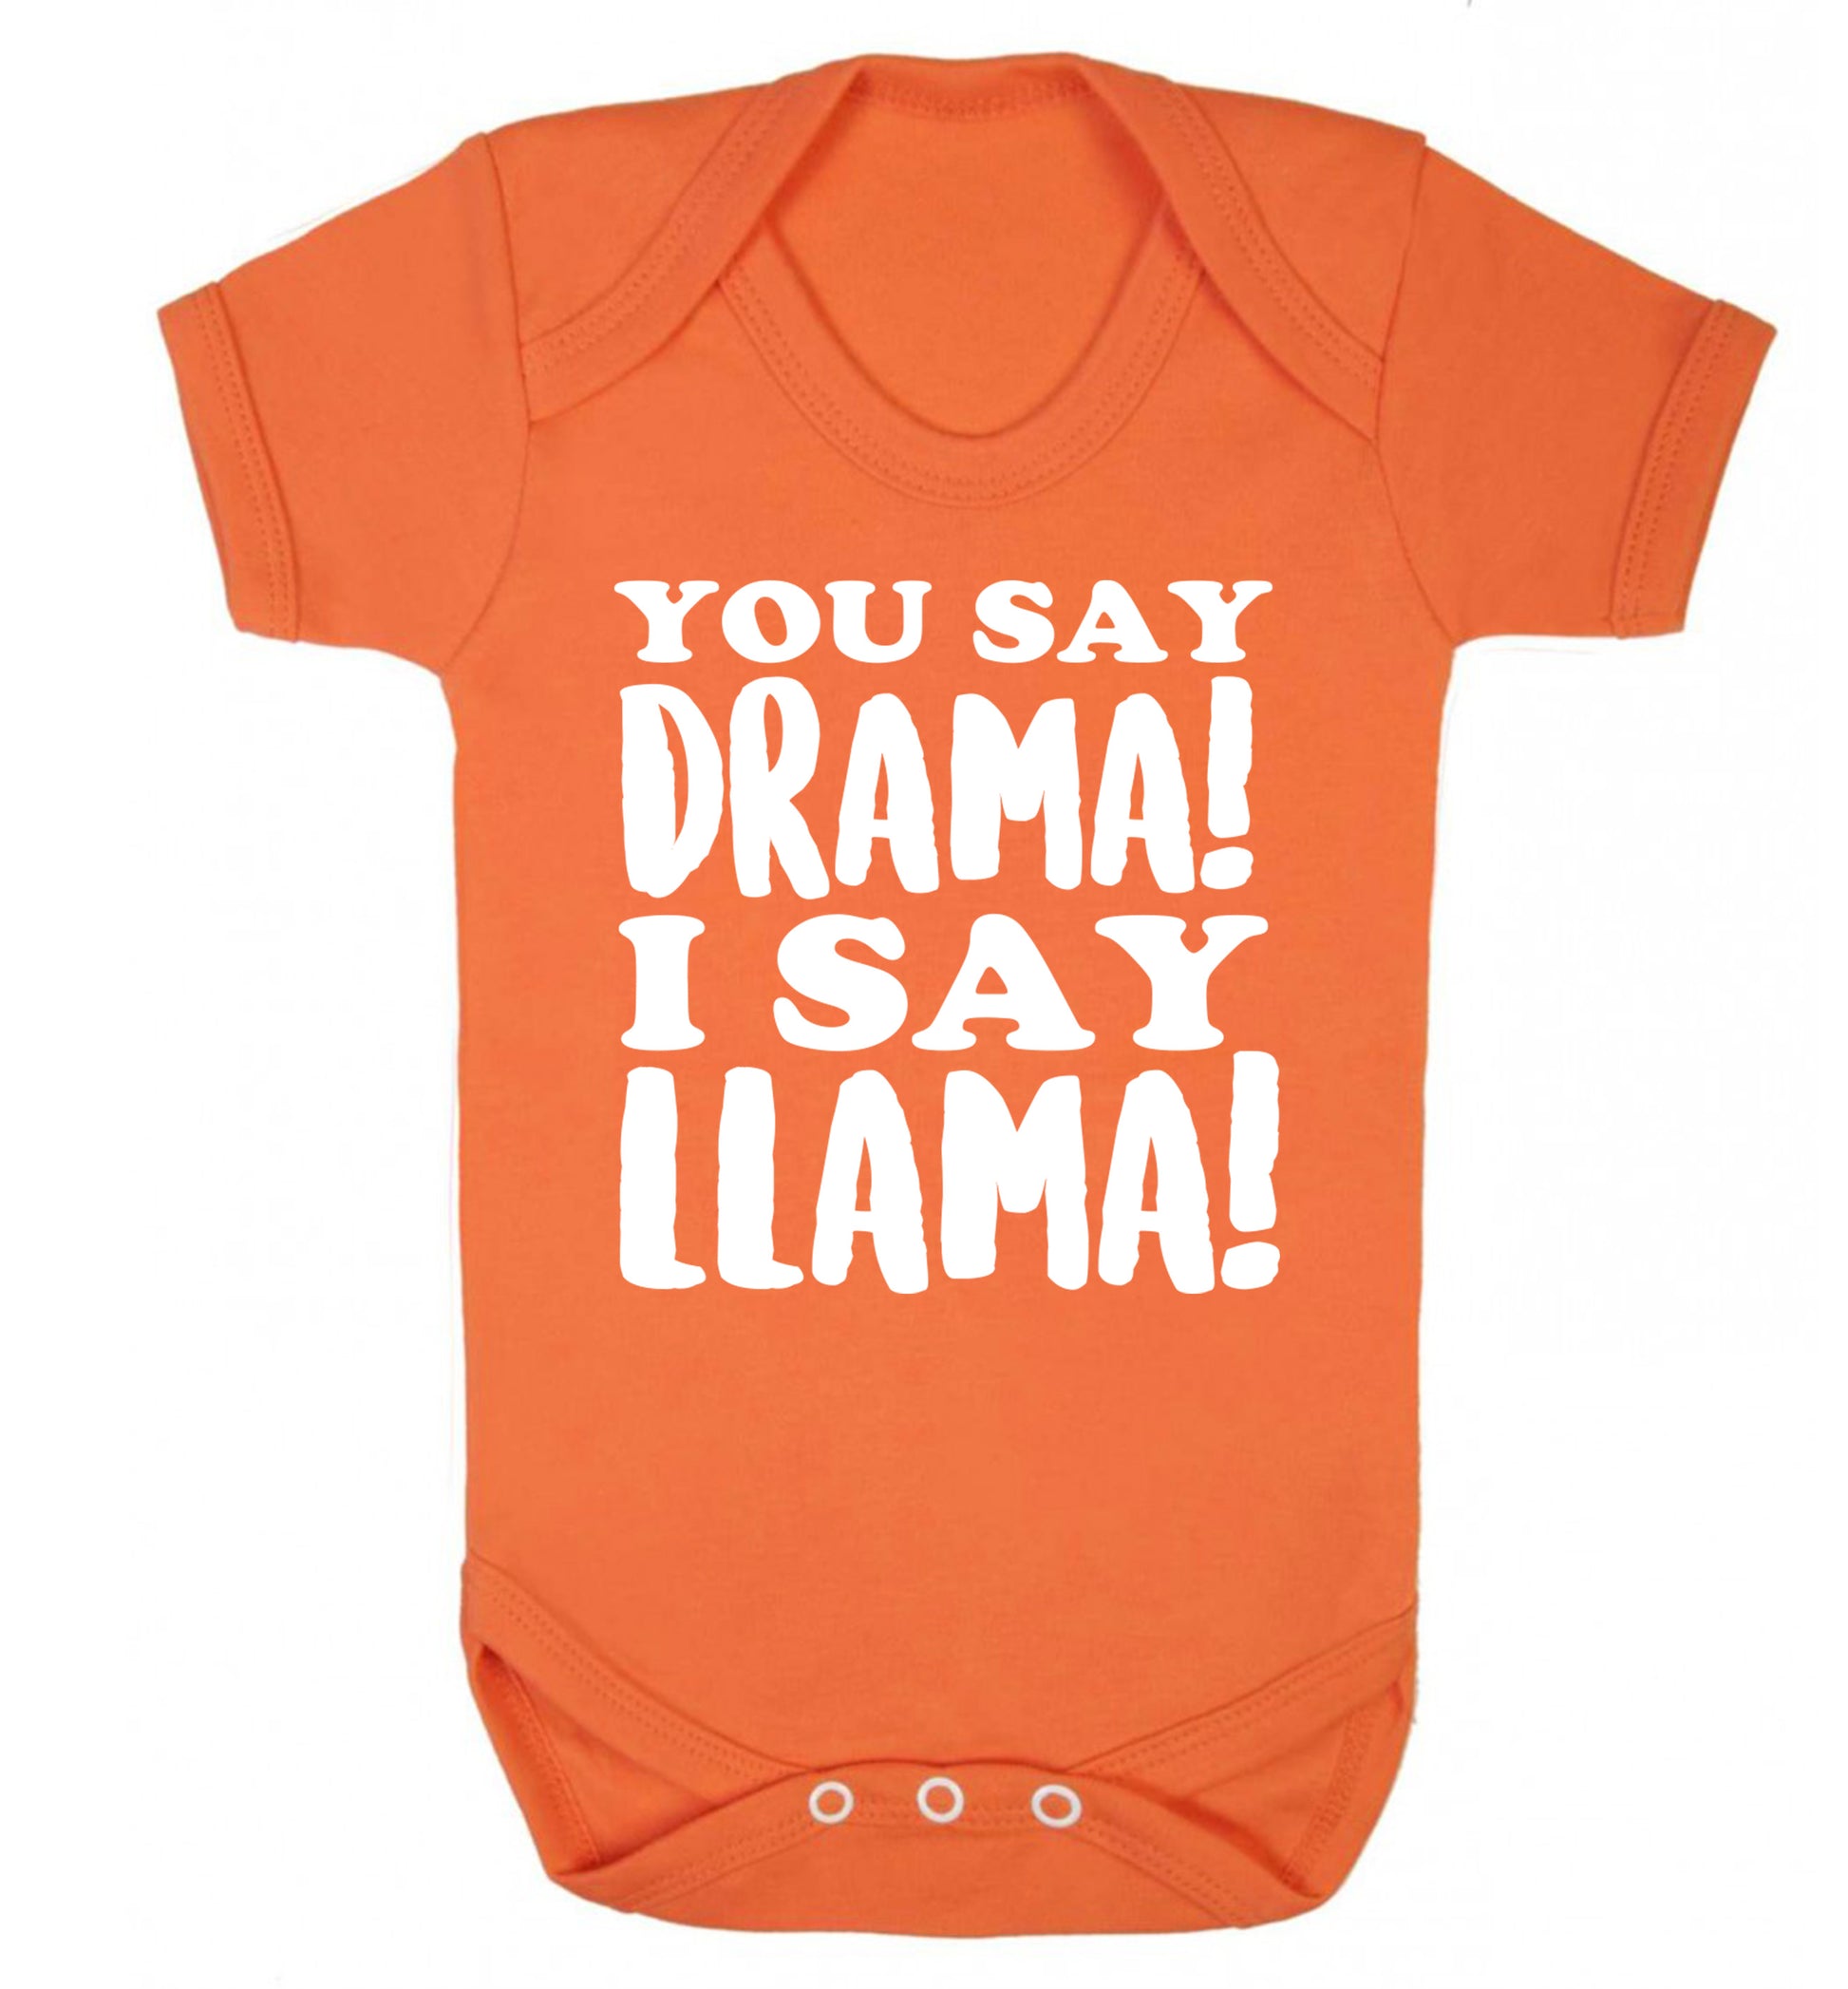 You say drama I say llama! Baby Vest orange 18-24 months